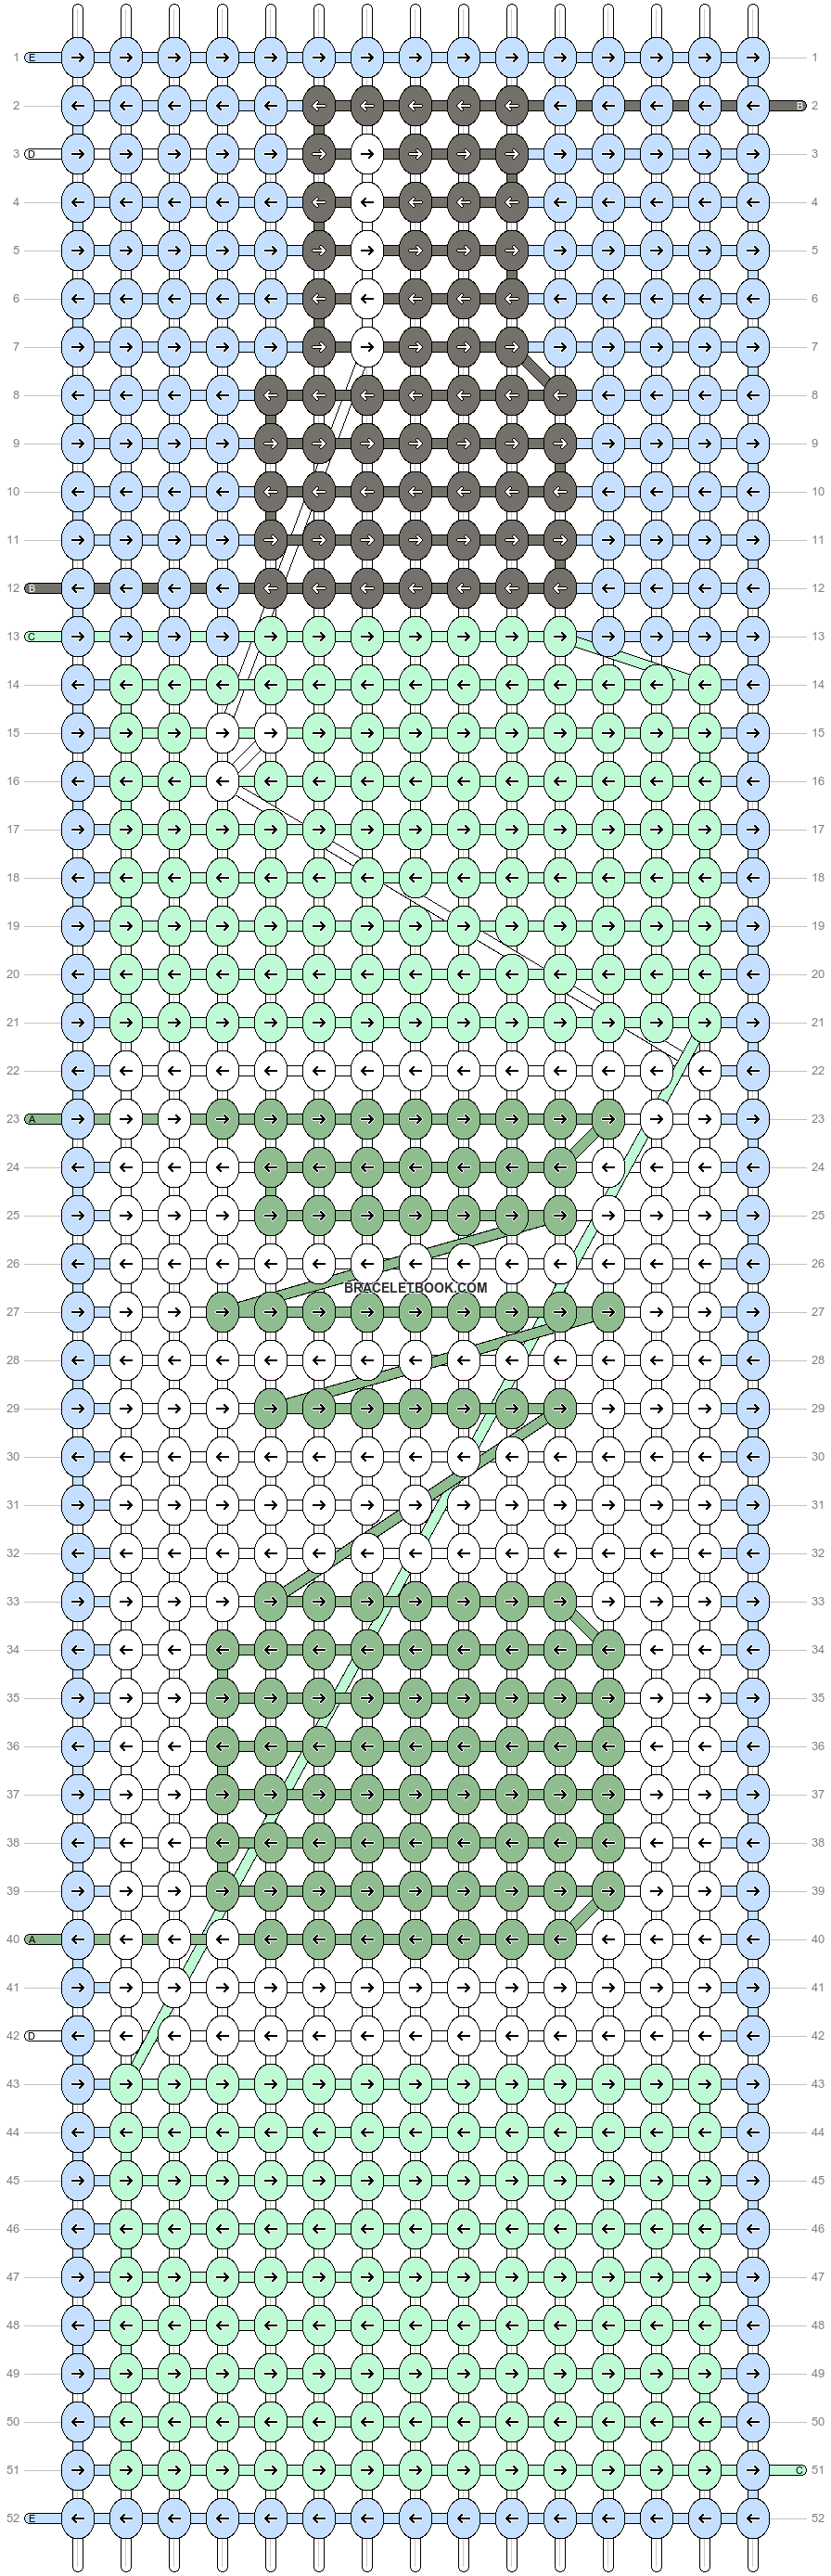 Alpha pattern #49028 variation #76835 pattern